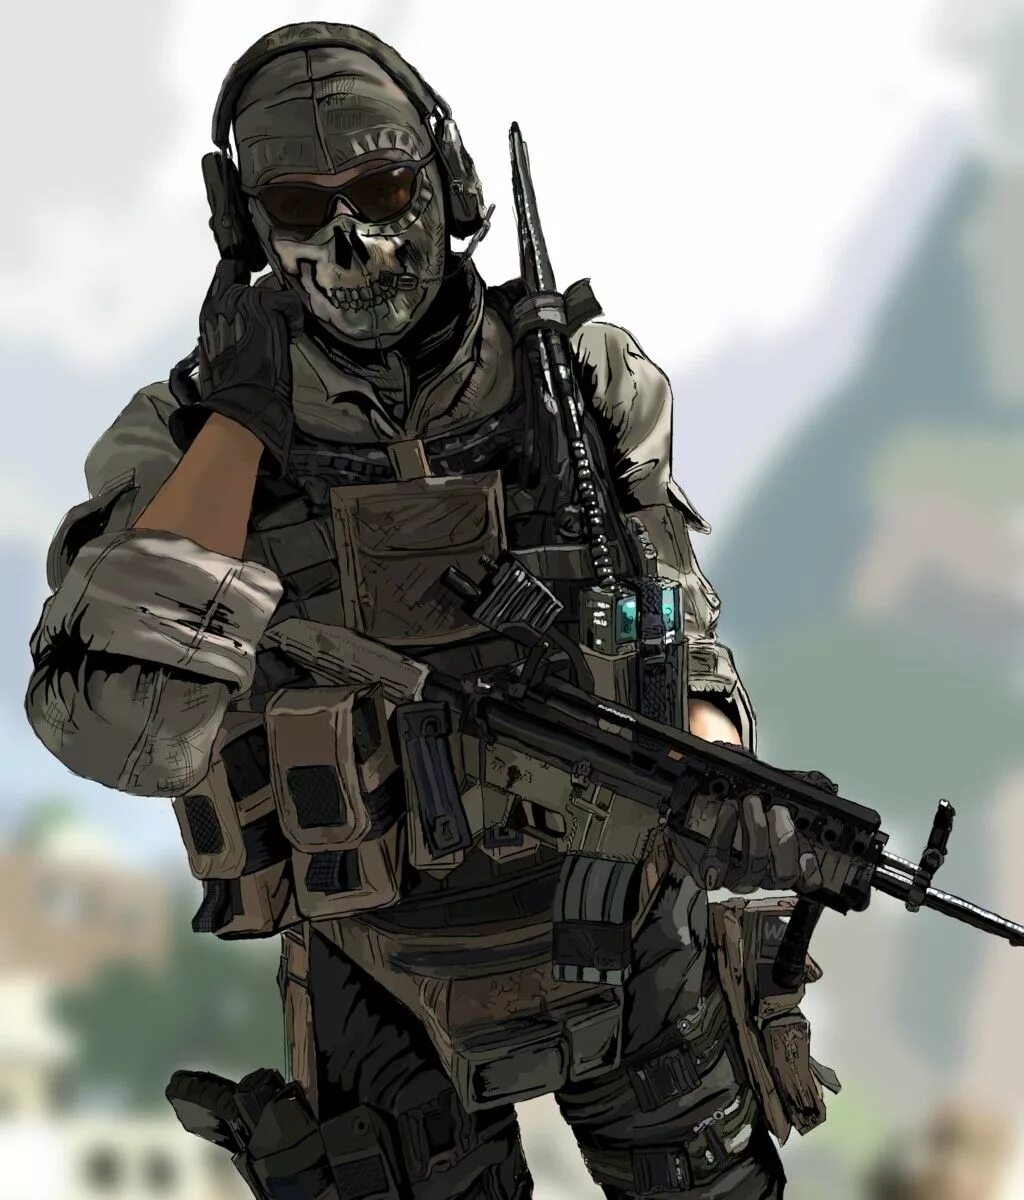 Череп тарков. Саймон "гоуст" Райли. Саймон гоуст Райли Call of Duty. Call of Duty Modern Warfare 2 гоуст. Саймон гоуст Райли Call of Duty Modern Warfare 2.